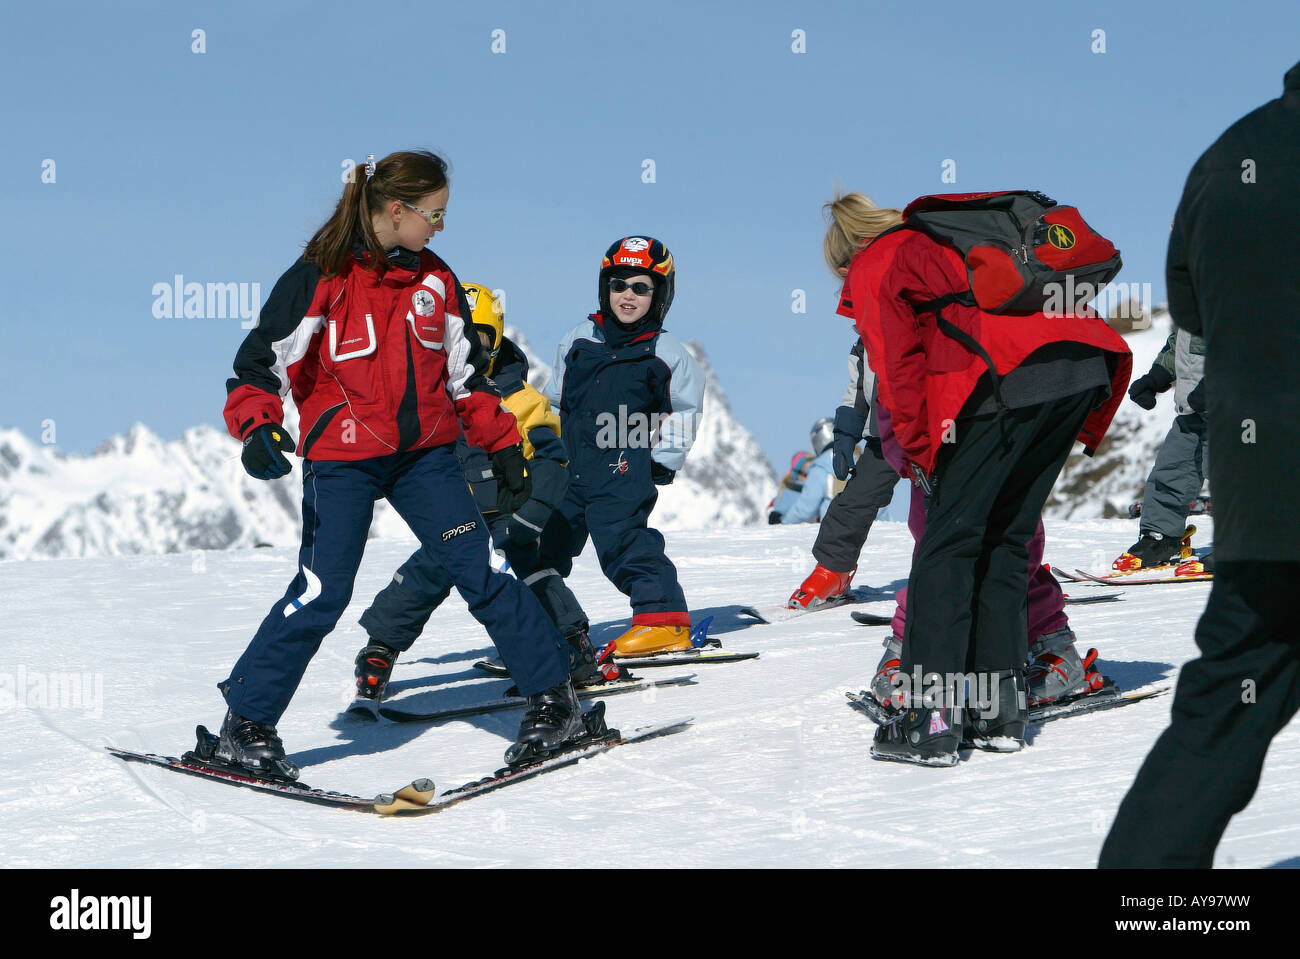 CHILDREN HAVING A SKI LESSON WITH INSTRUCTOR, AUSTRIA Stock Photo ...